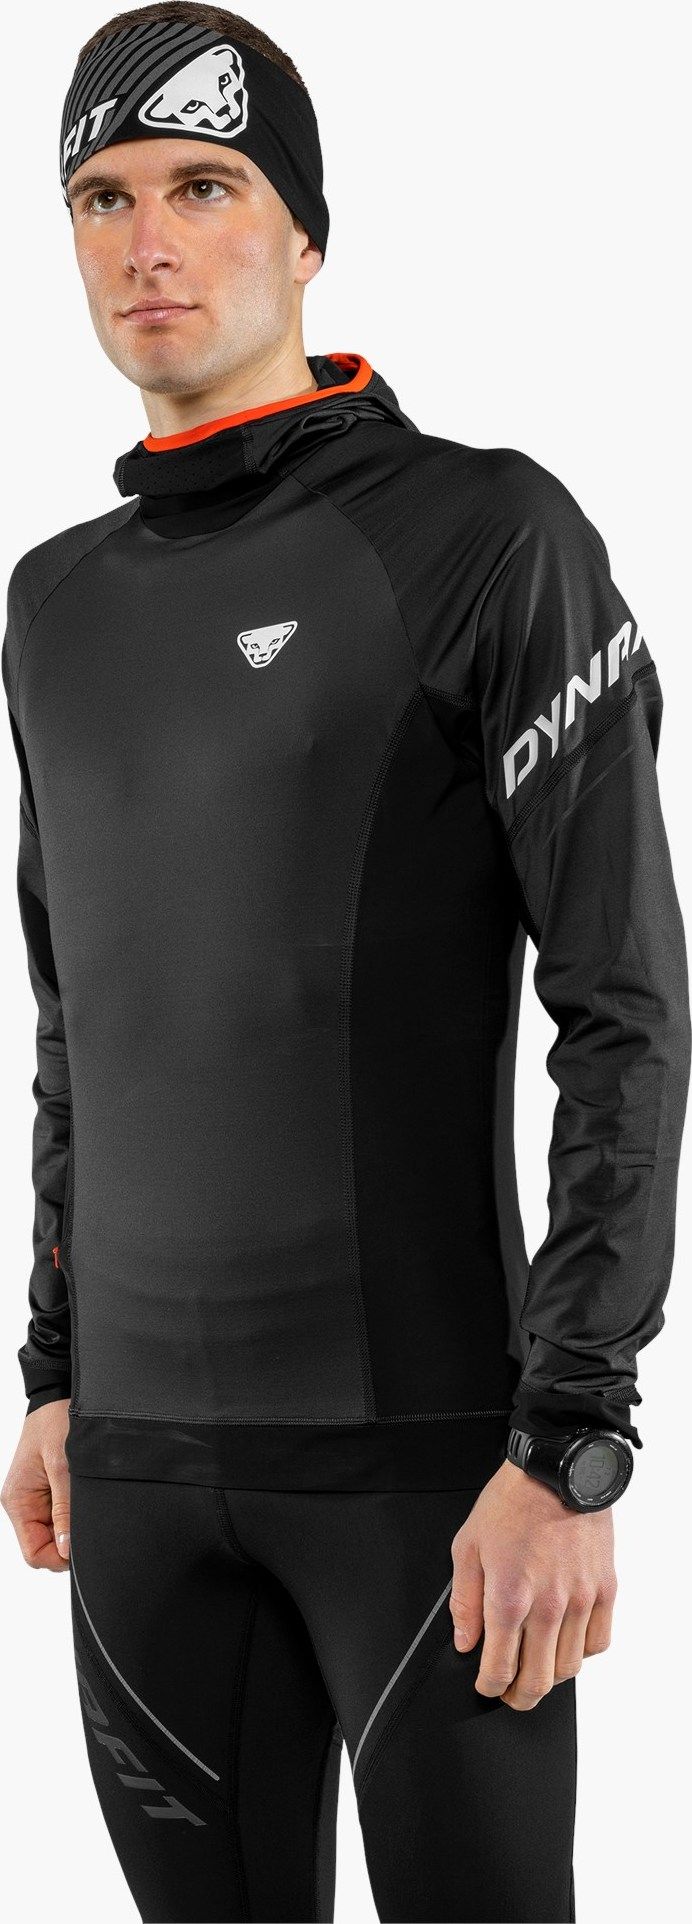 Dynafit Men's Alpine Long Sleeve Tee Black Out Dynafit